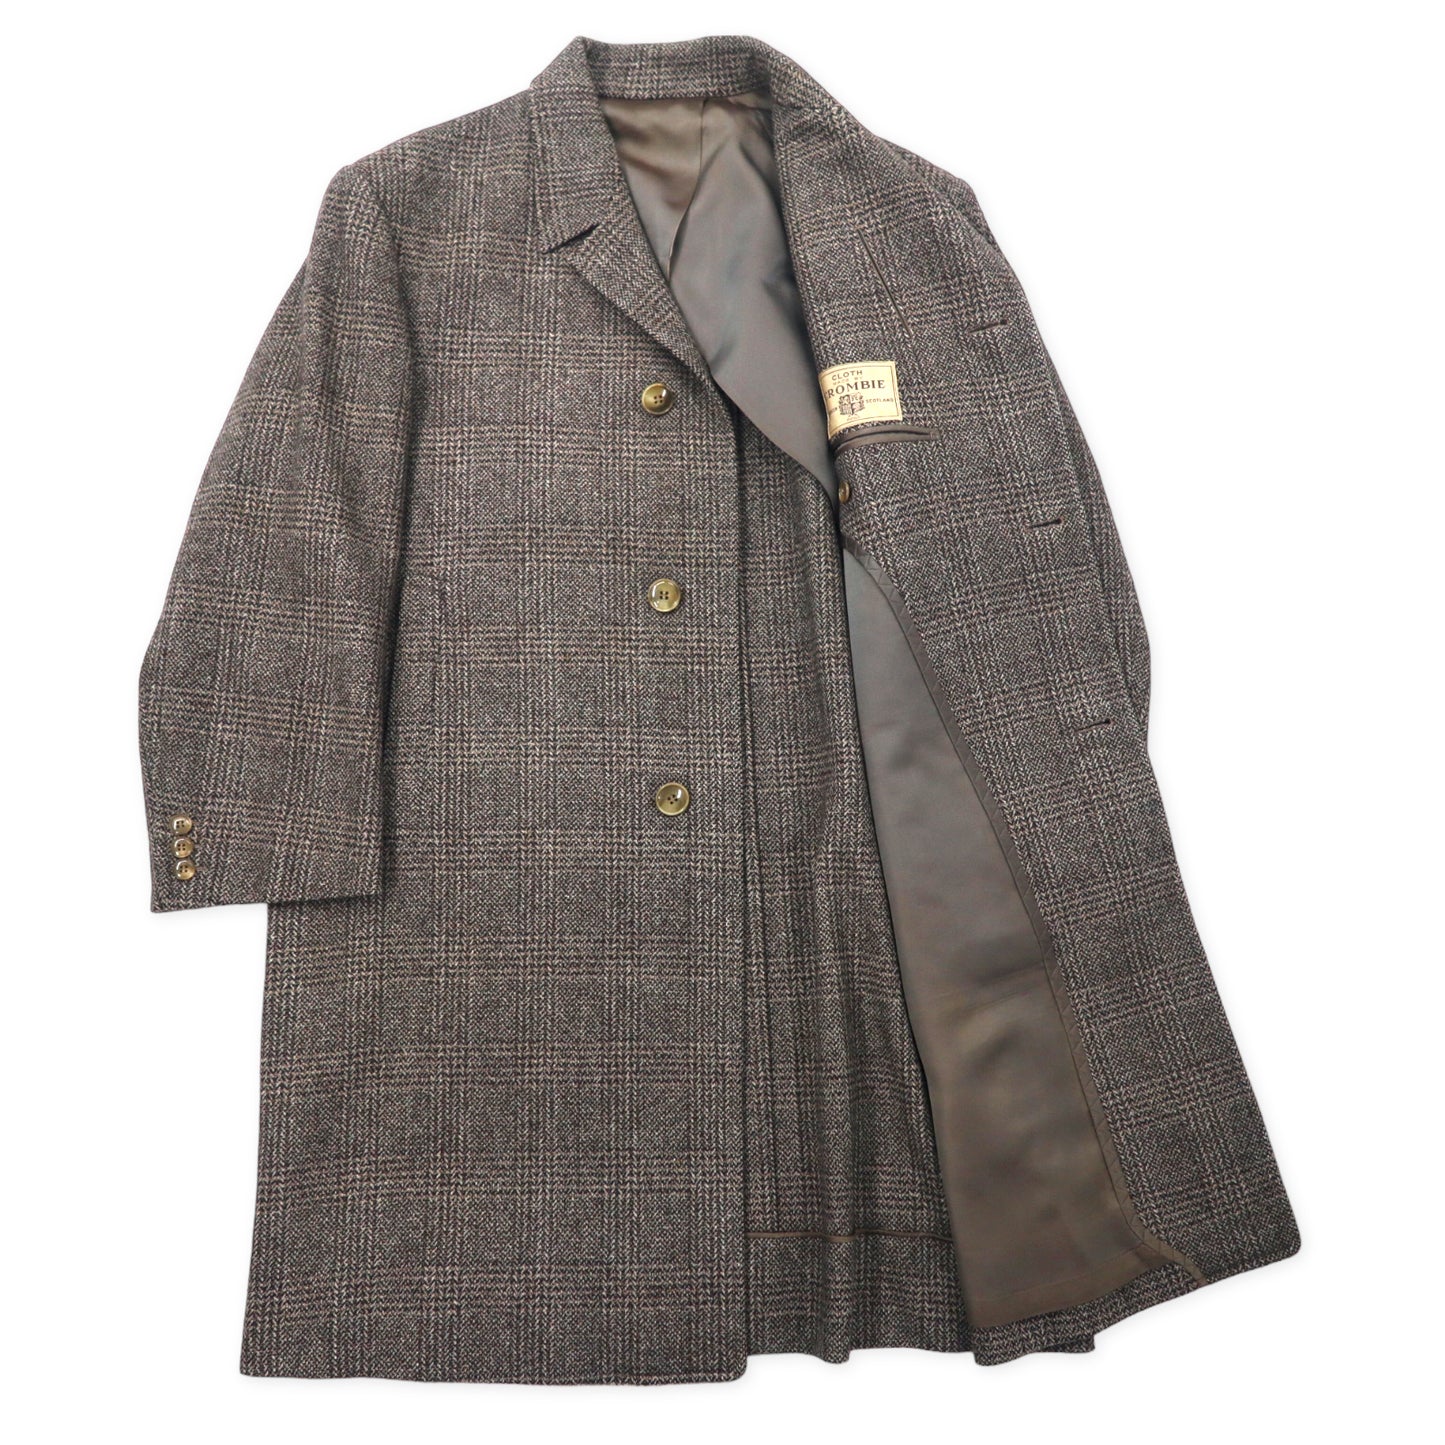 Vintage British Tweed Over Coat 60年代 CLOTH MADE BY CROMBIE OF SCOTLAND チェスターコート M グレー グレンチェック ウール